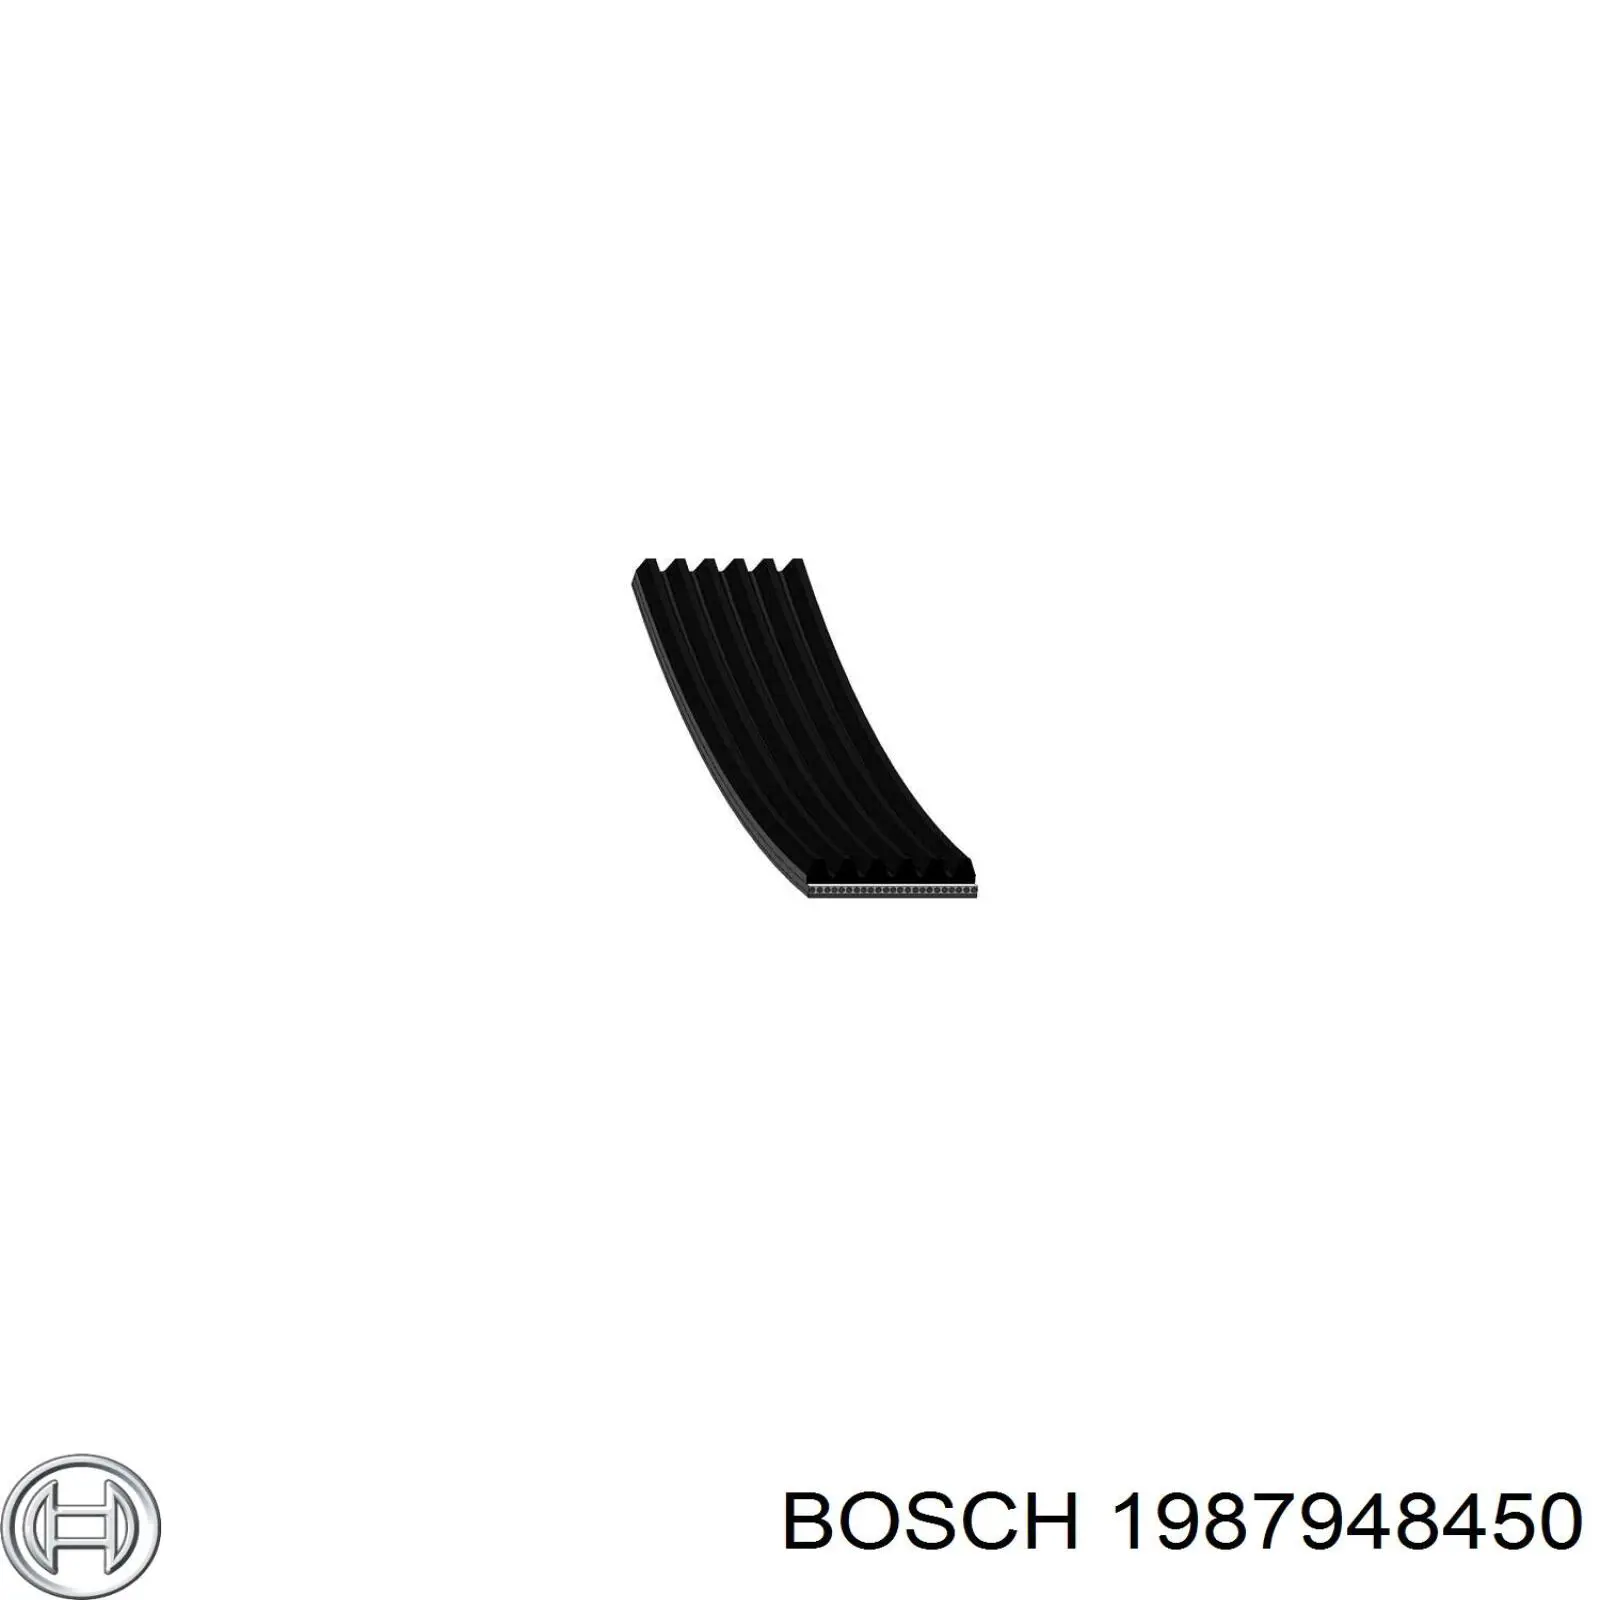 1 987 948 450 Bosch correa trapezoidal